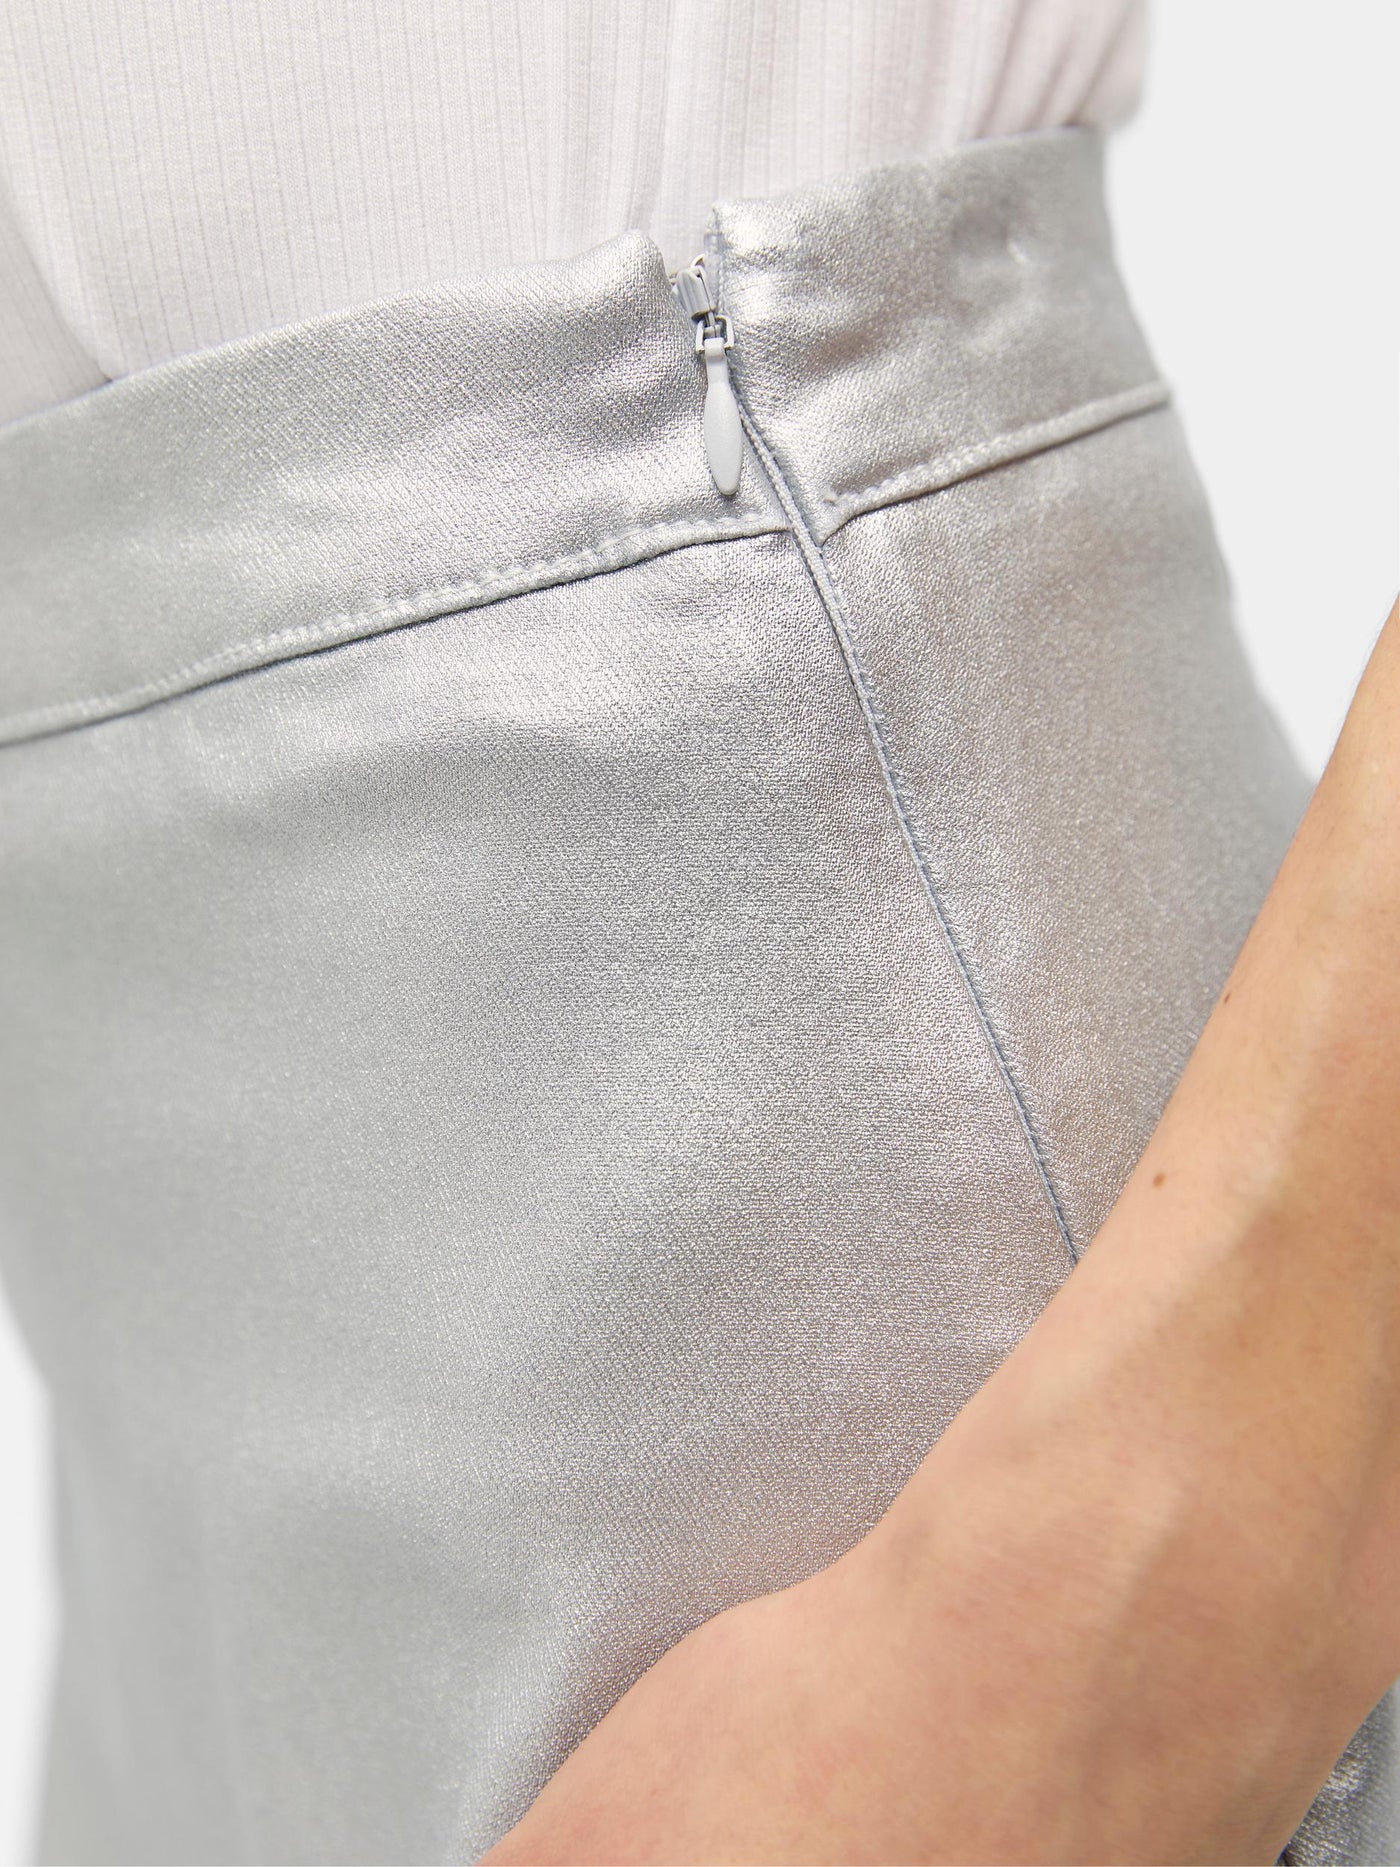 Silver Metallic Mini Skirt